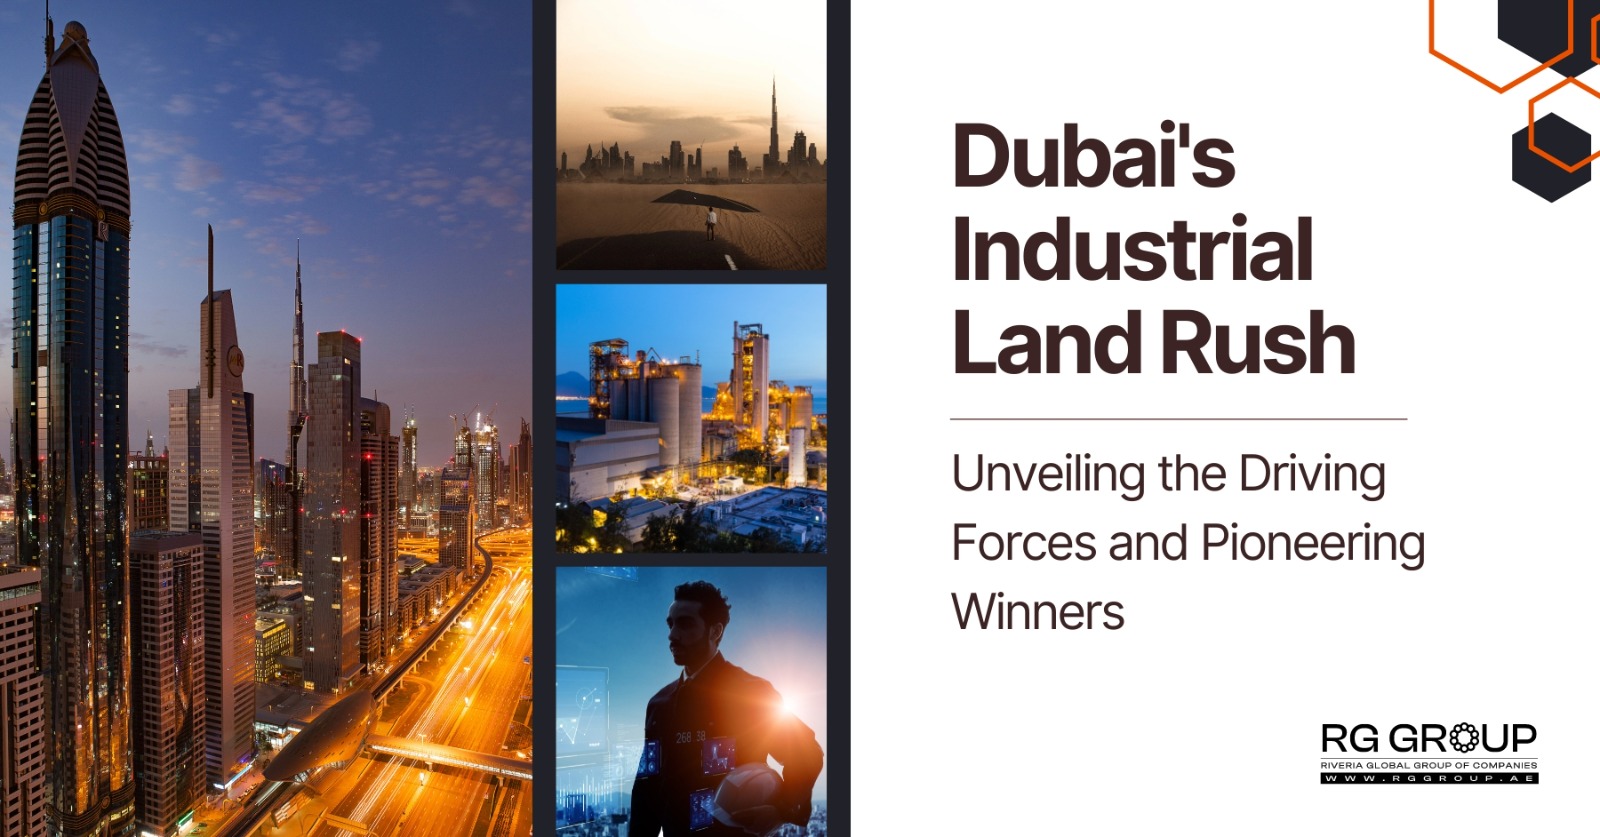 Dubai's Industrial Land